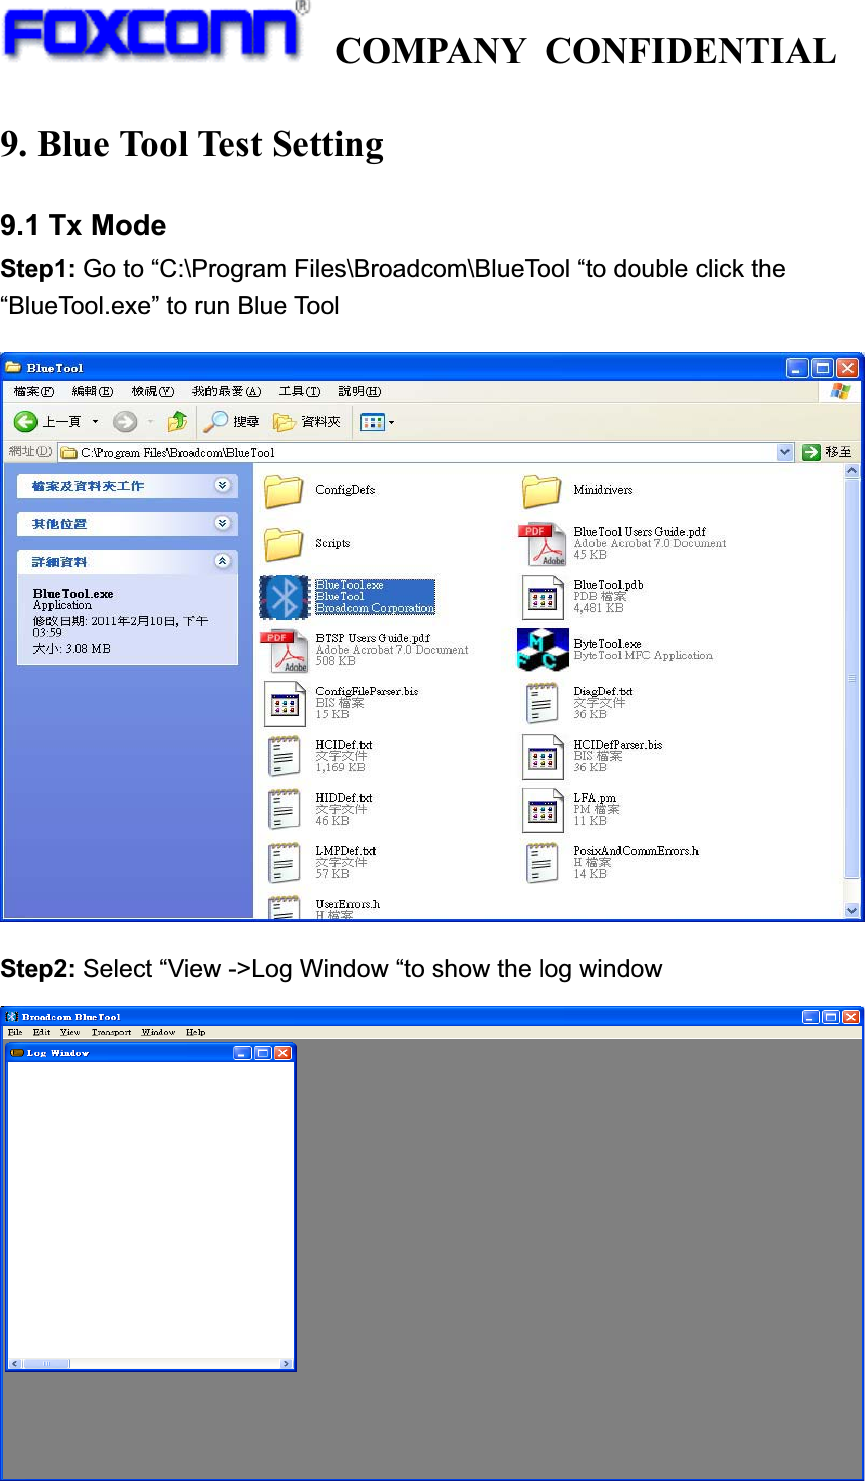   COMPANY CONFIDENTIAL             9. Blue Tool Test Setting 9.1 Tx Mode Step1: Go to “C:\Program Files\Broadcom\BlueTool “to double click the “BlueTool.exe” to run Blue Tool  Step2: Select “View -&gt;Log Window “to show the log window  